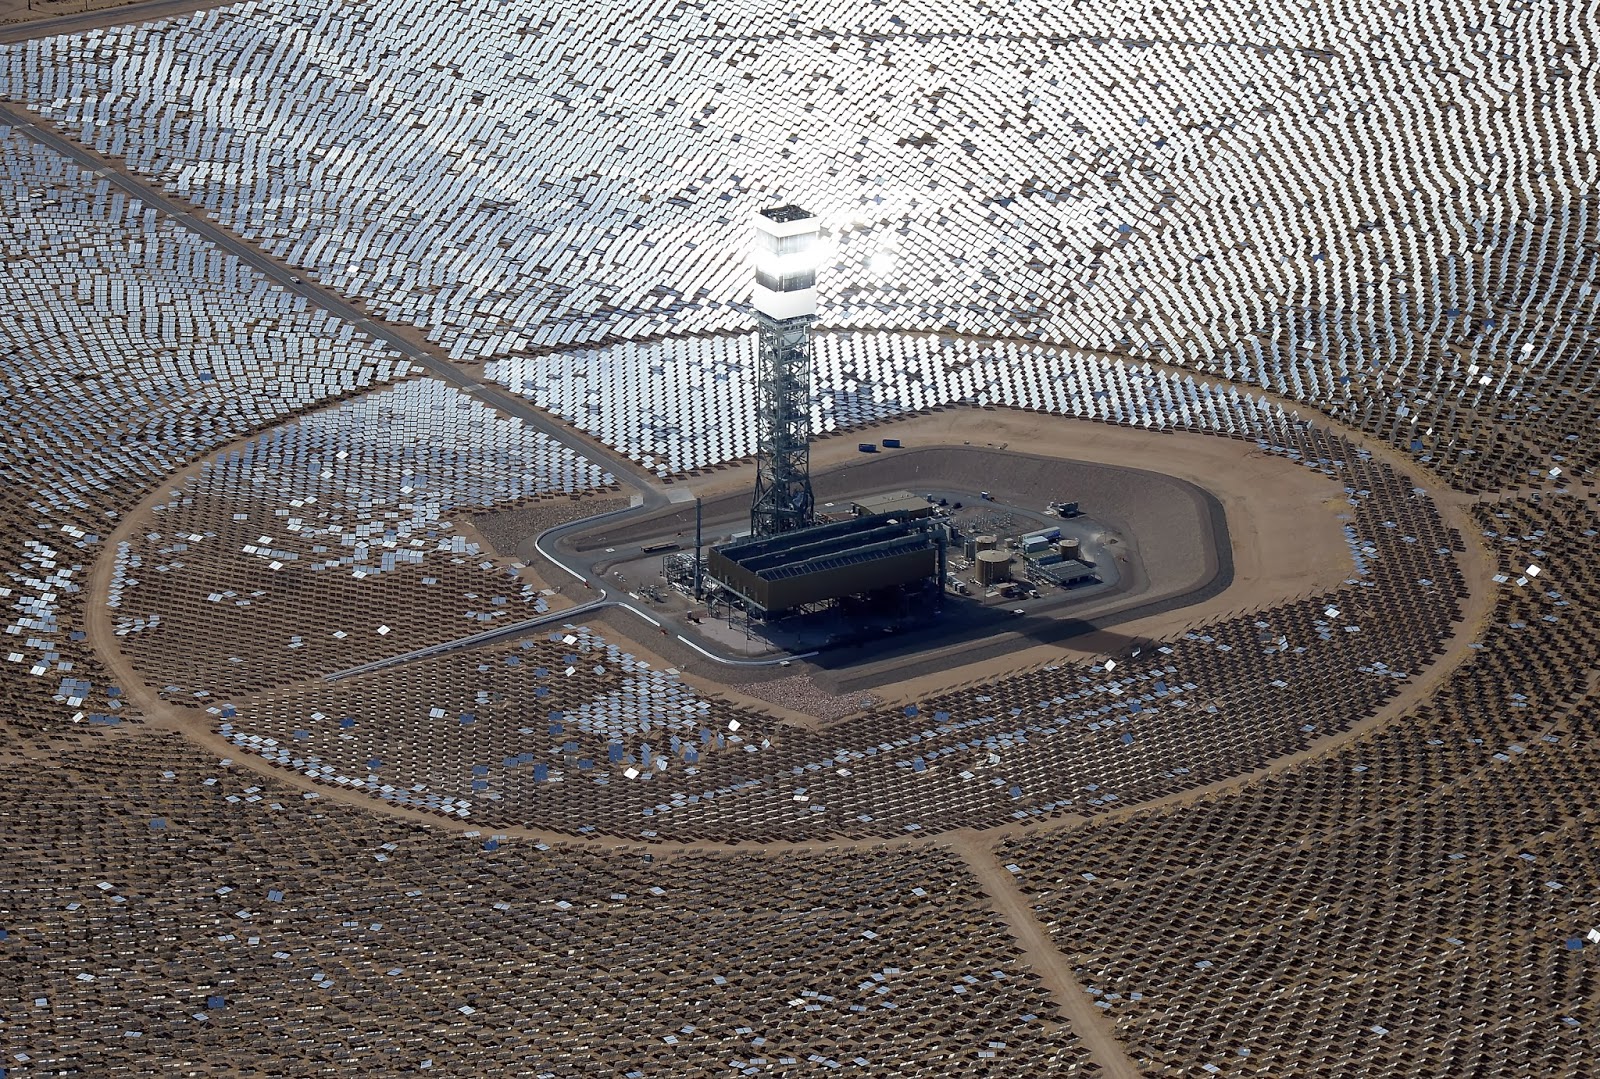  Power Station, Solar Power Plant, Technology, US, USA, World Largest